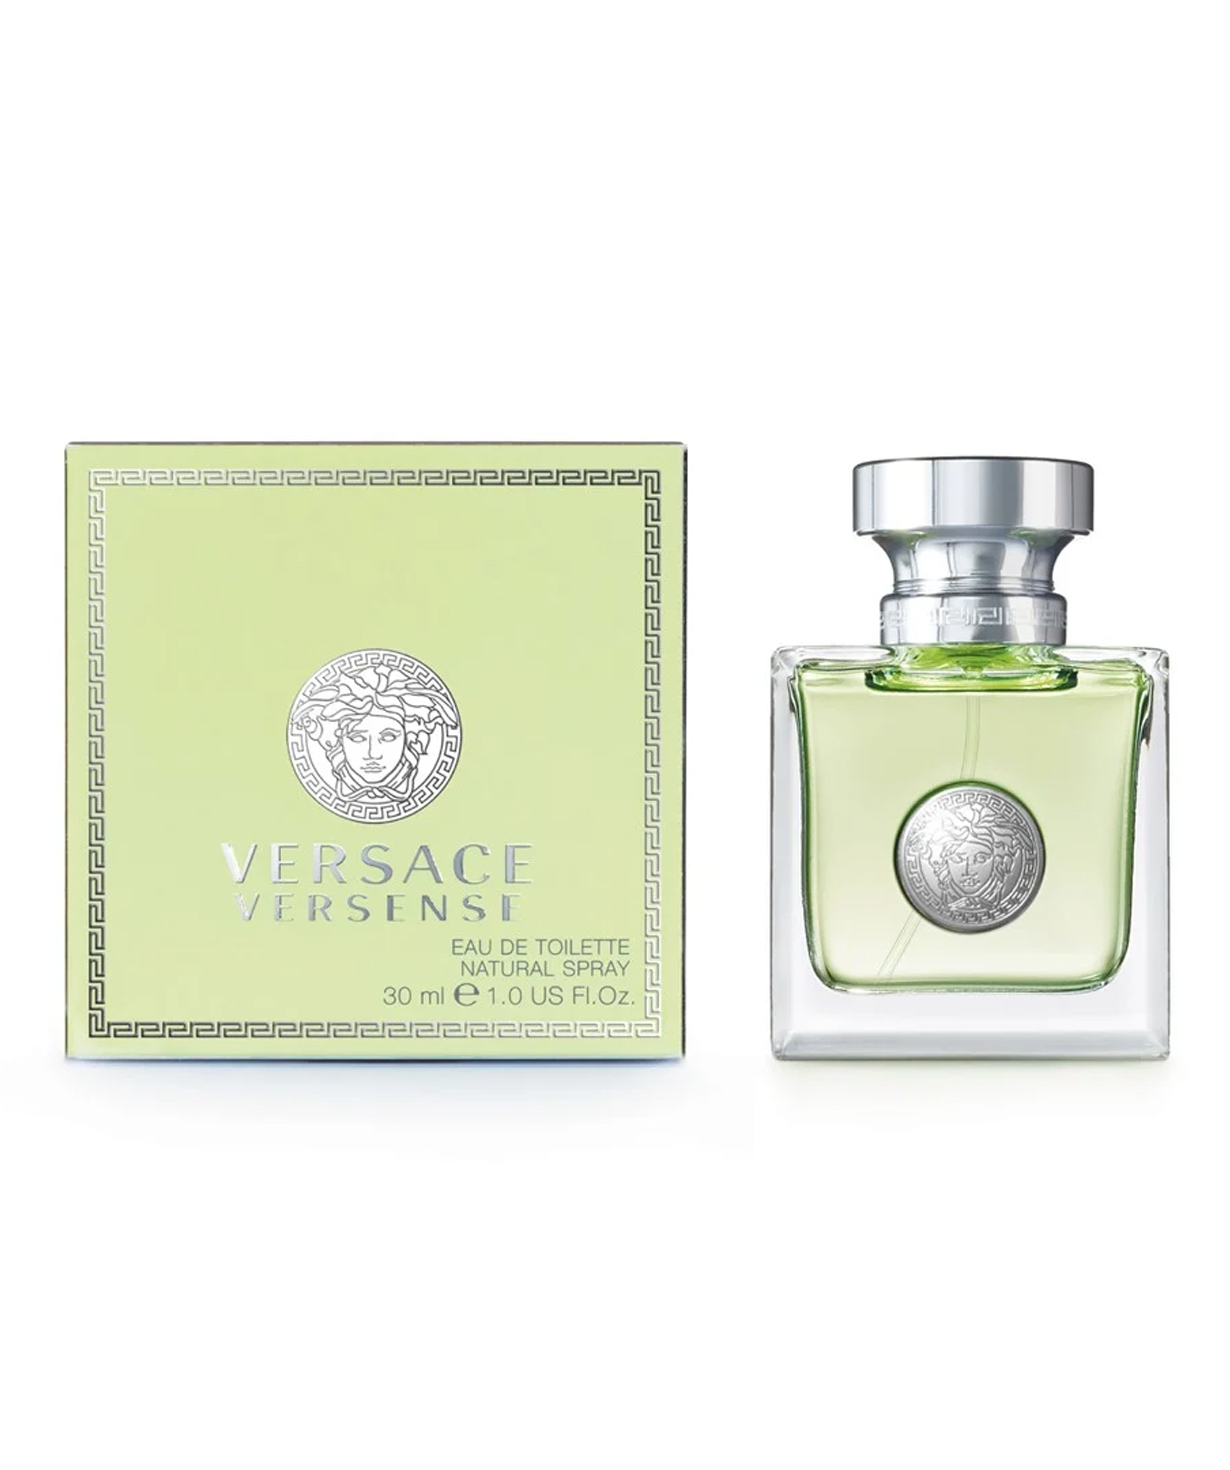 Perfume «Versace» Versense, for women, 30 ml